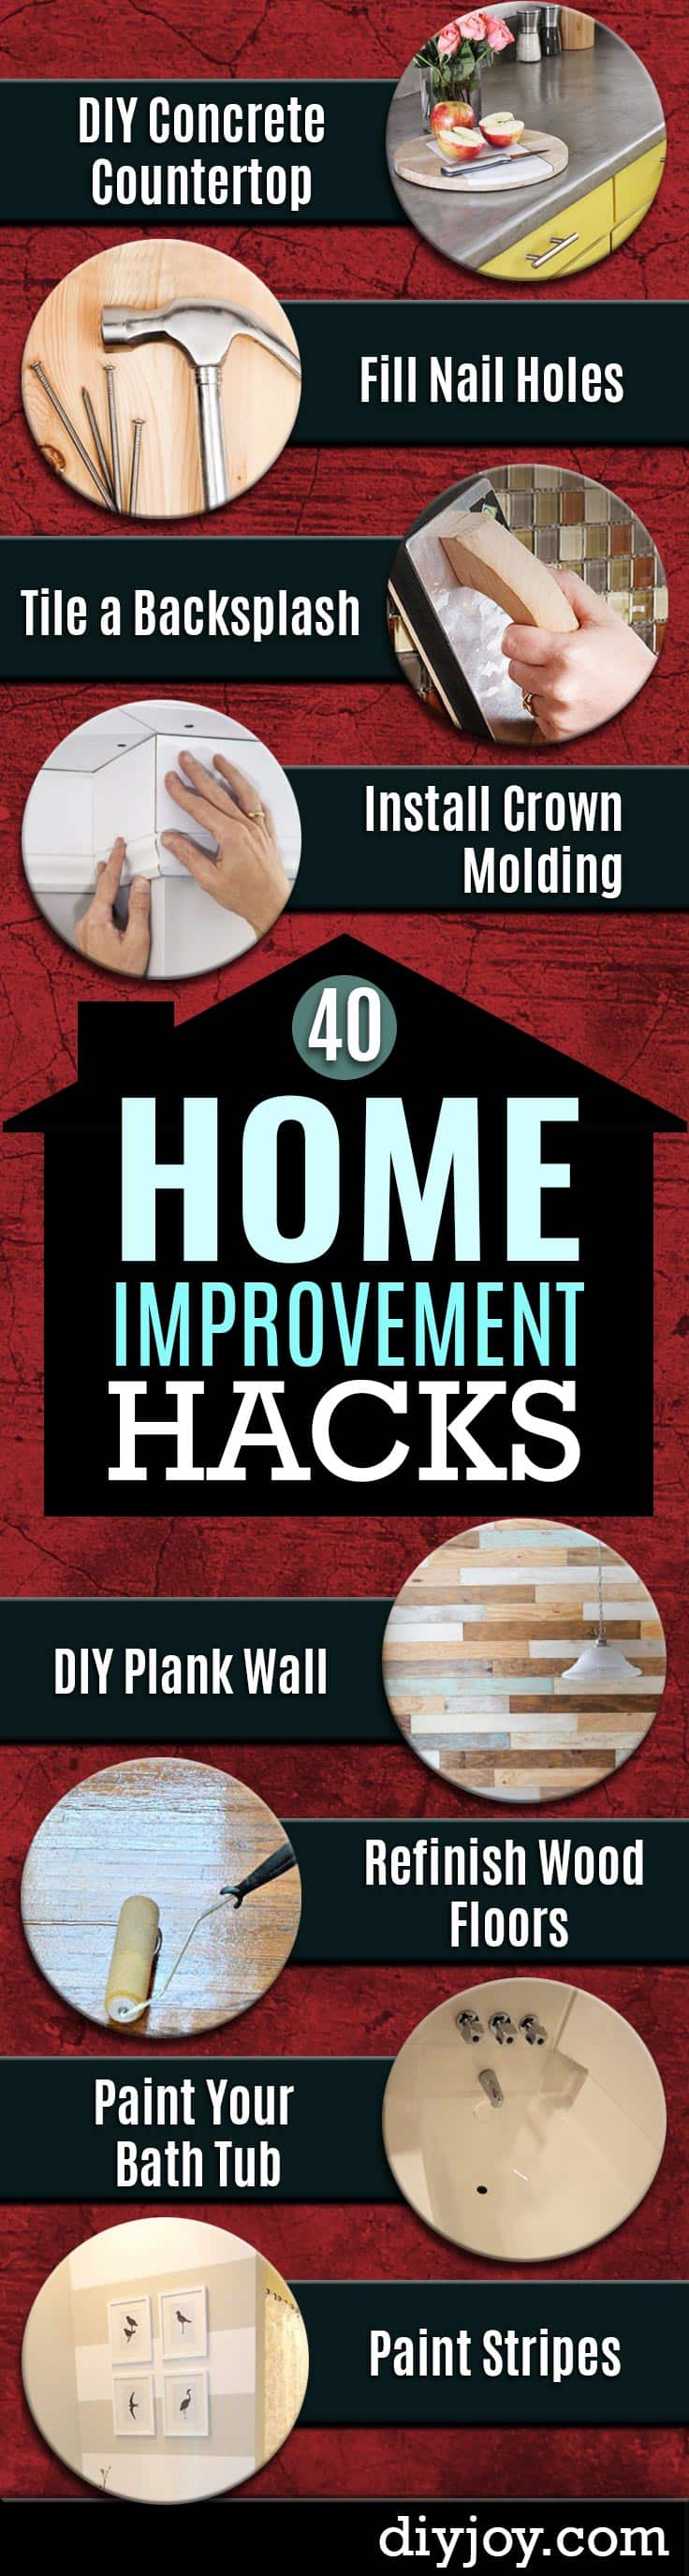 home-improvement-hacks.jpg